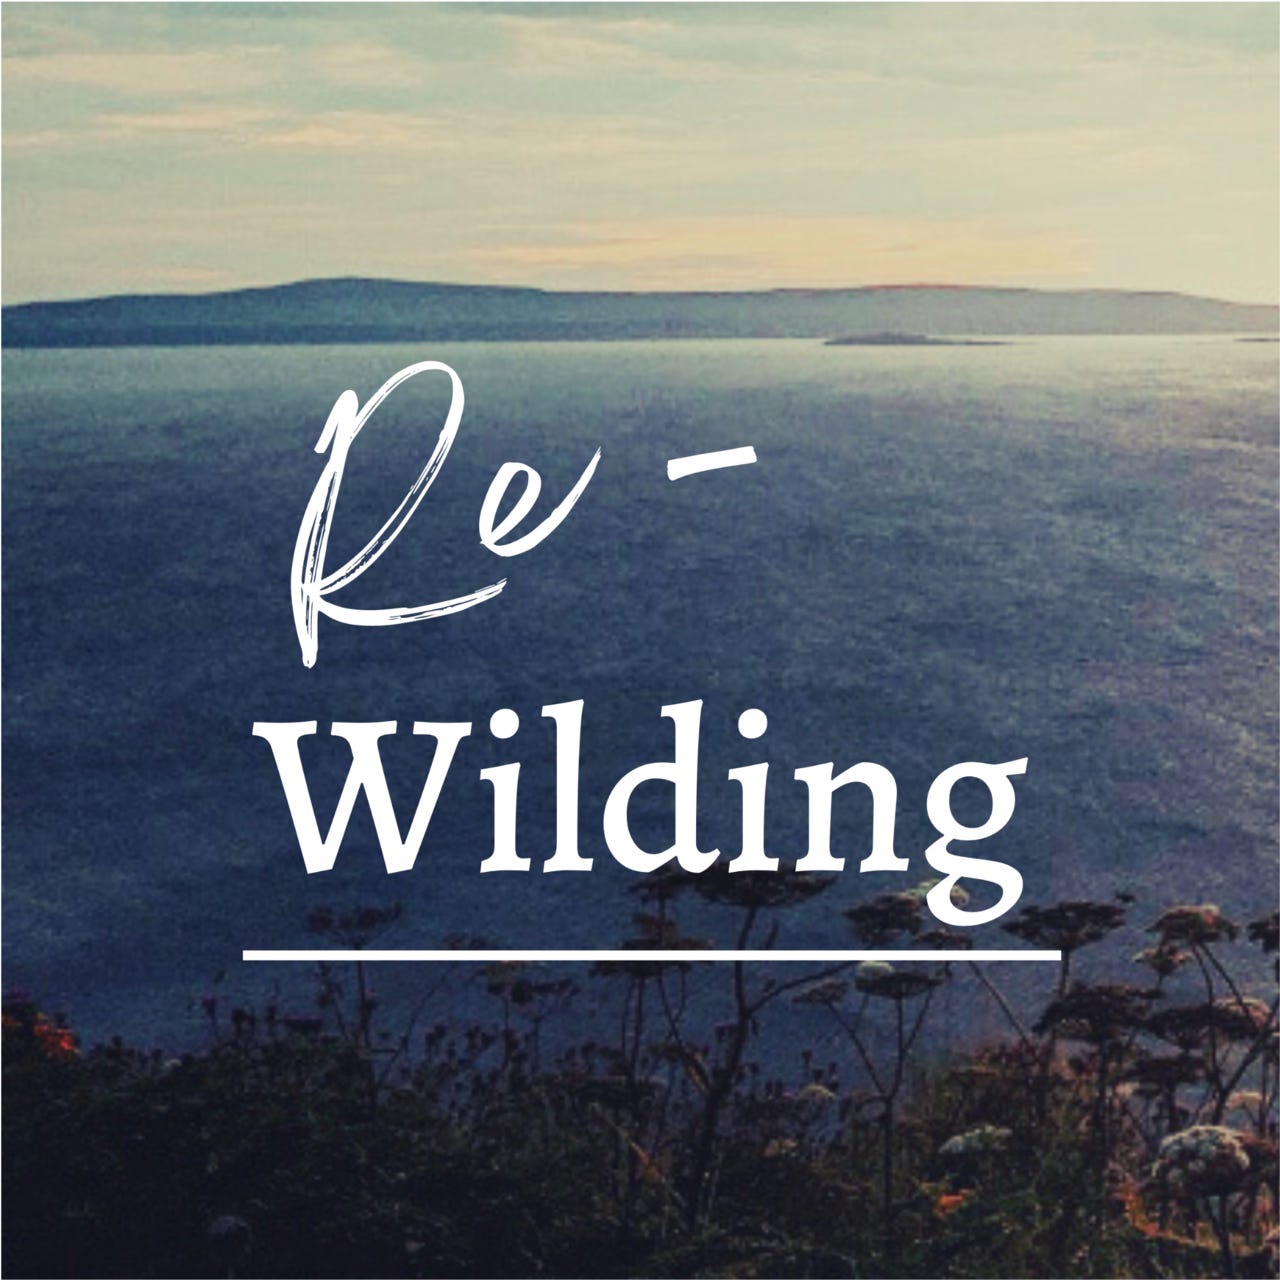 Rewilding